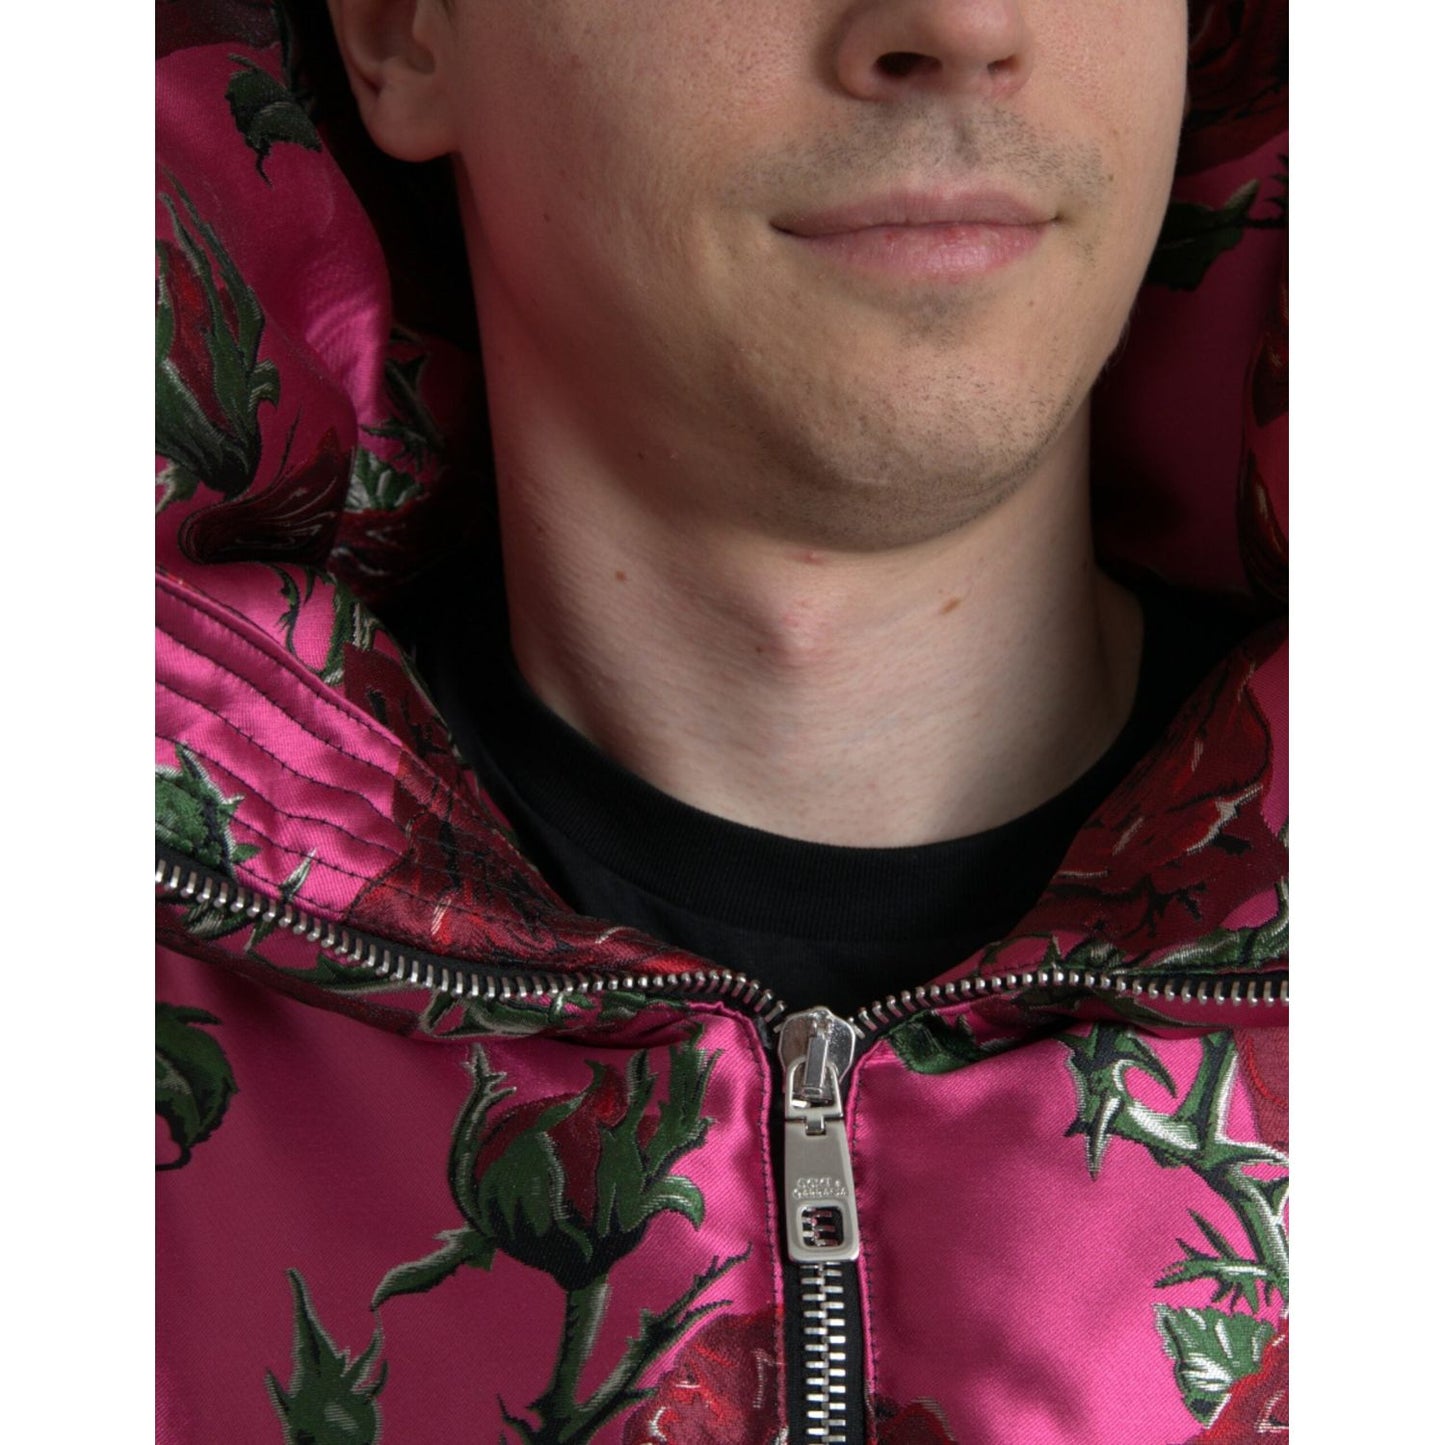 Dolce & Gabbana Elegant Rose Print Quilted Jacket pink-roses-pattern-hooded-padded-zip-jacket